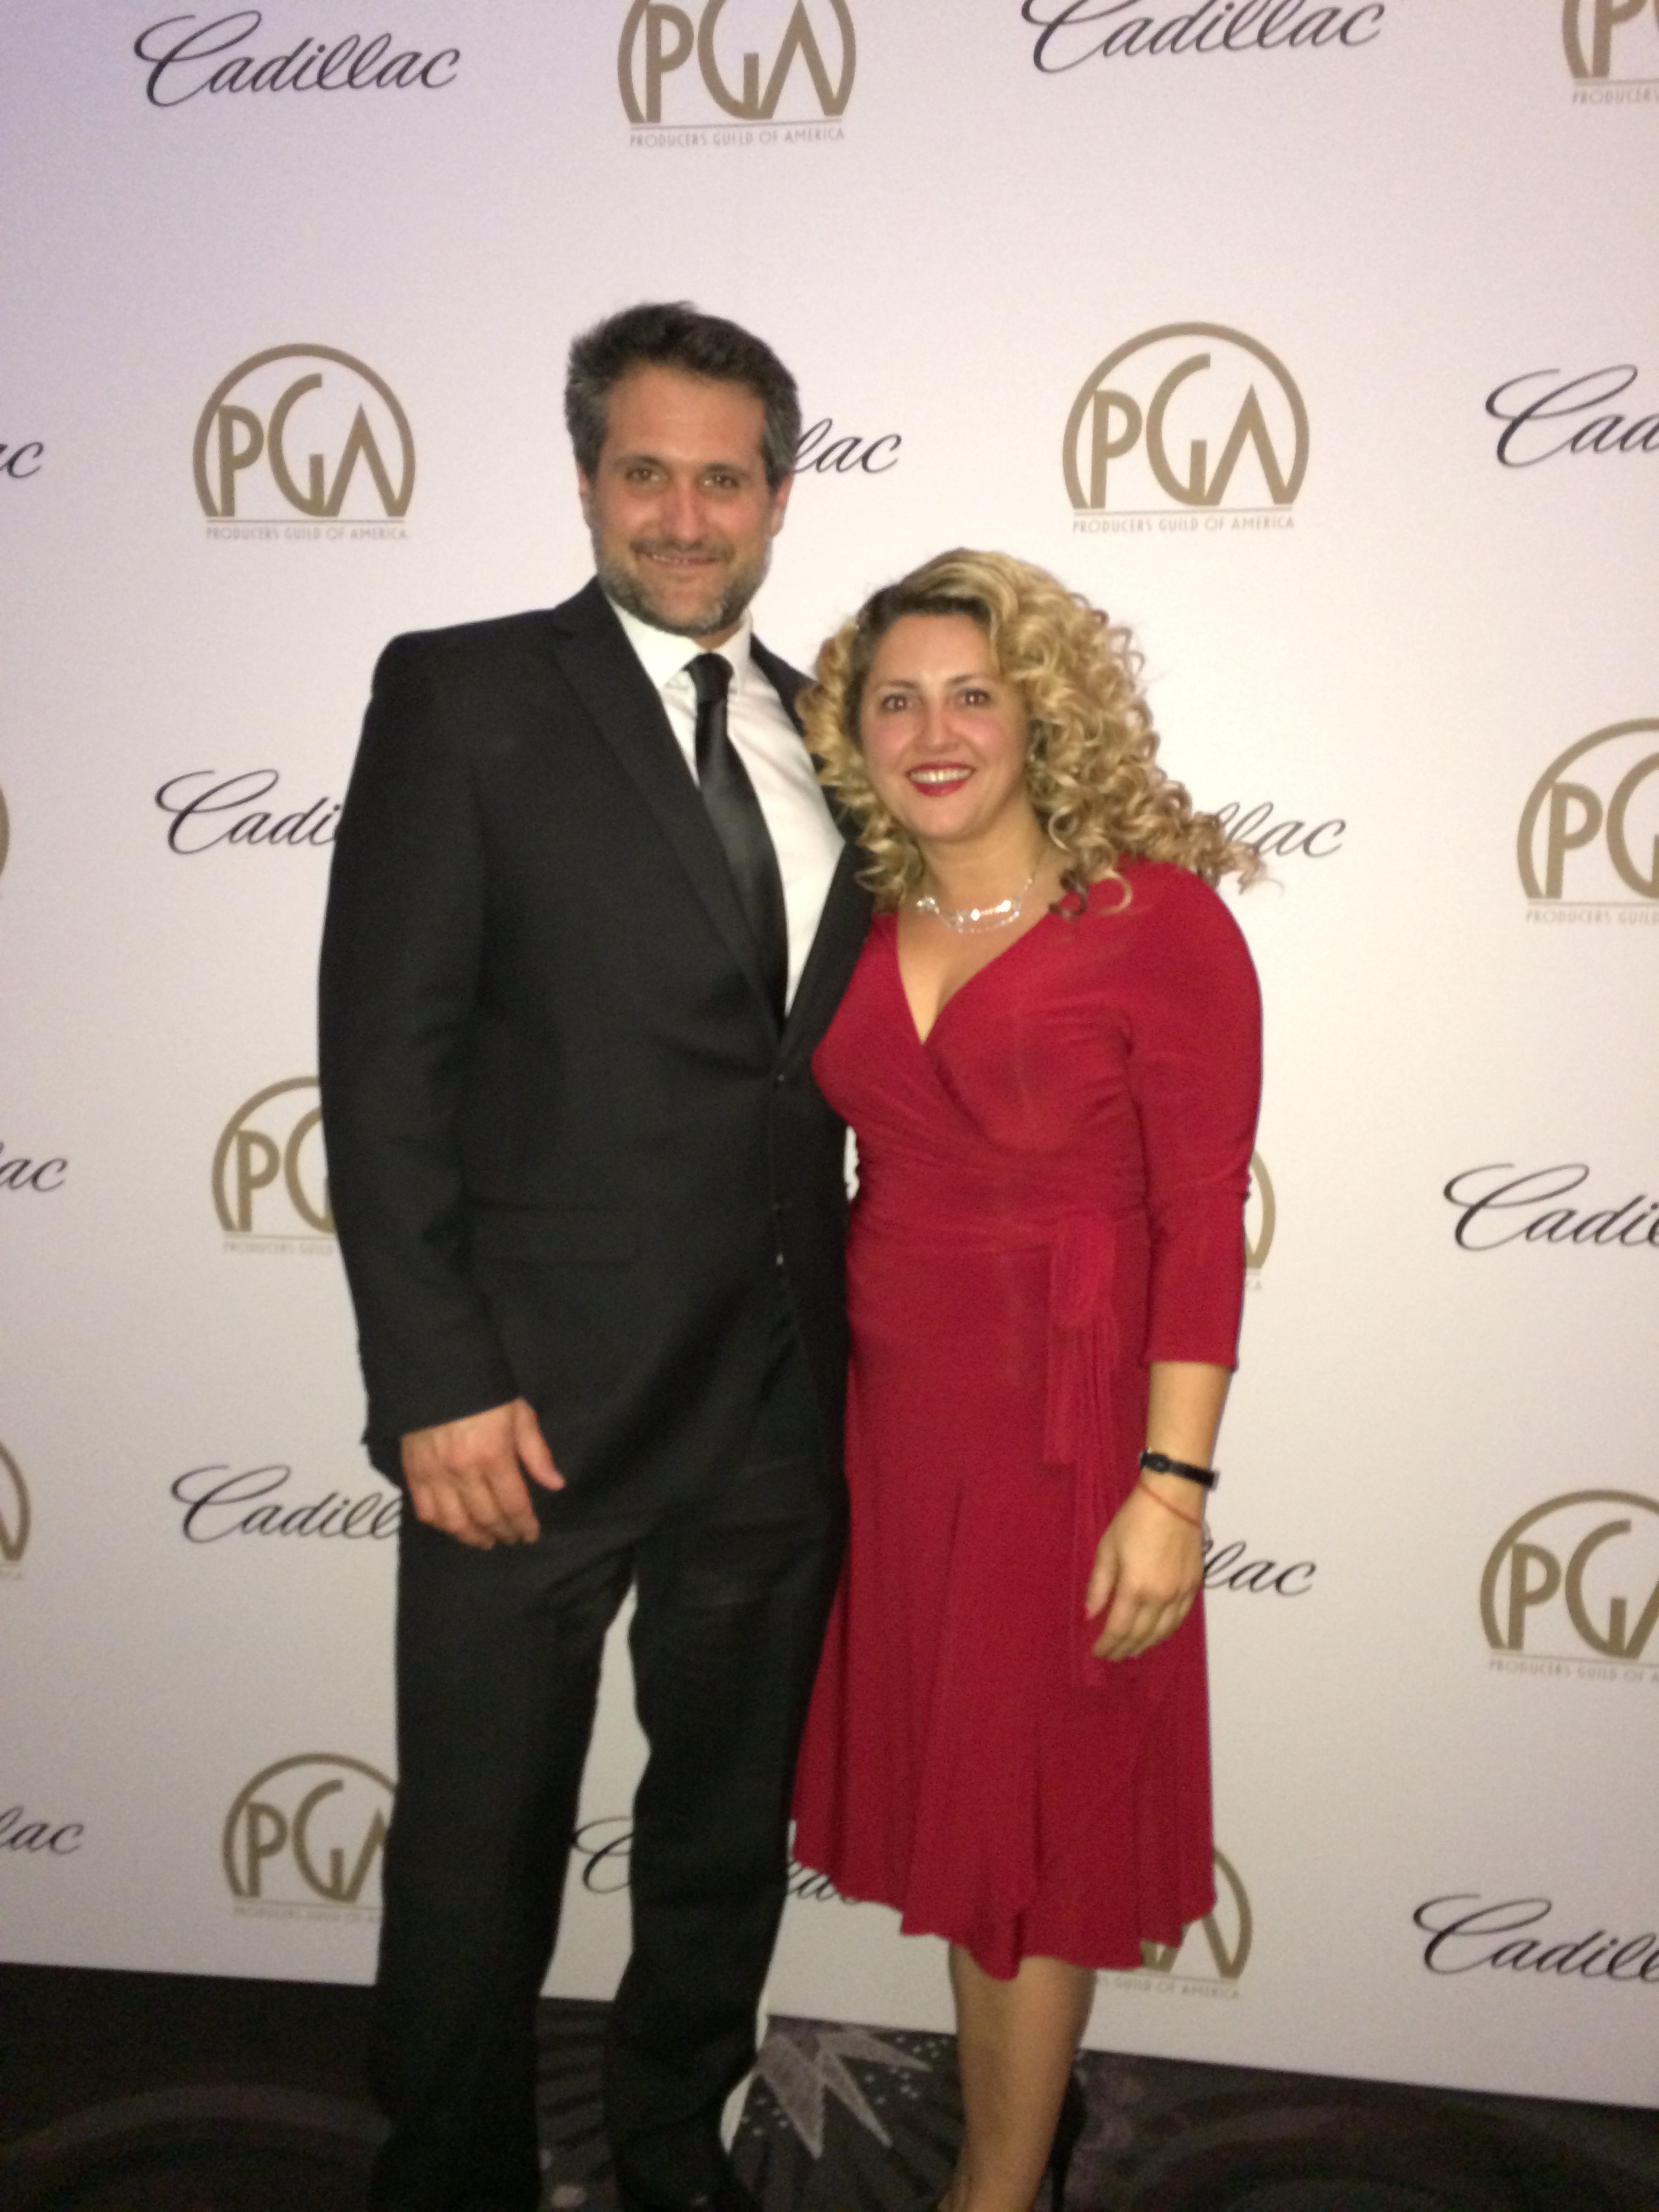 PGA Awards 2014 with fellow Producer Ryan Westheimer